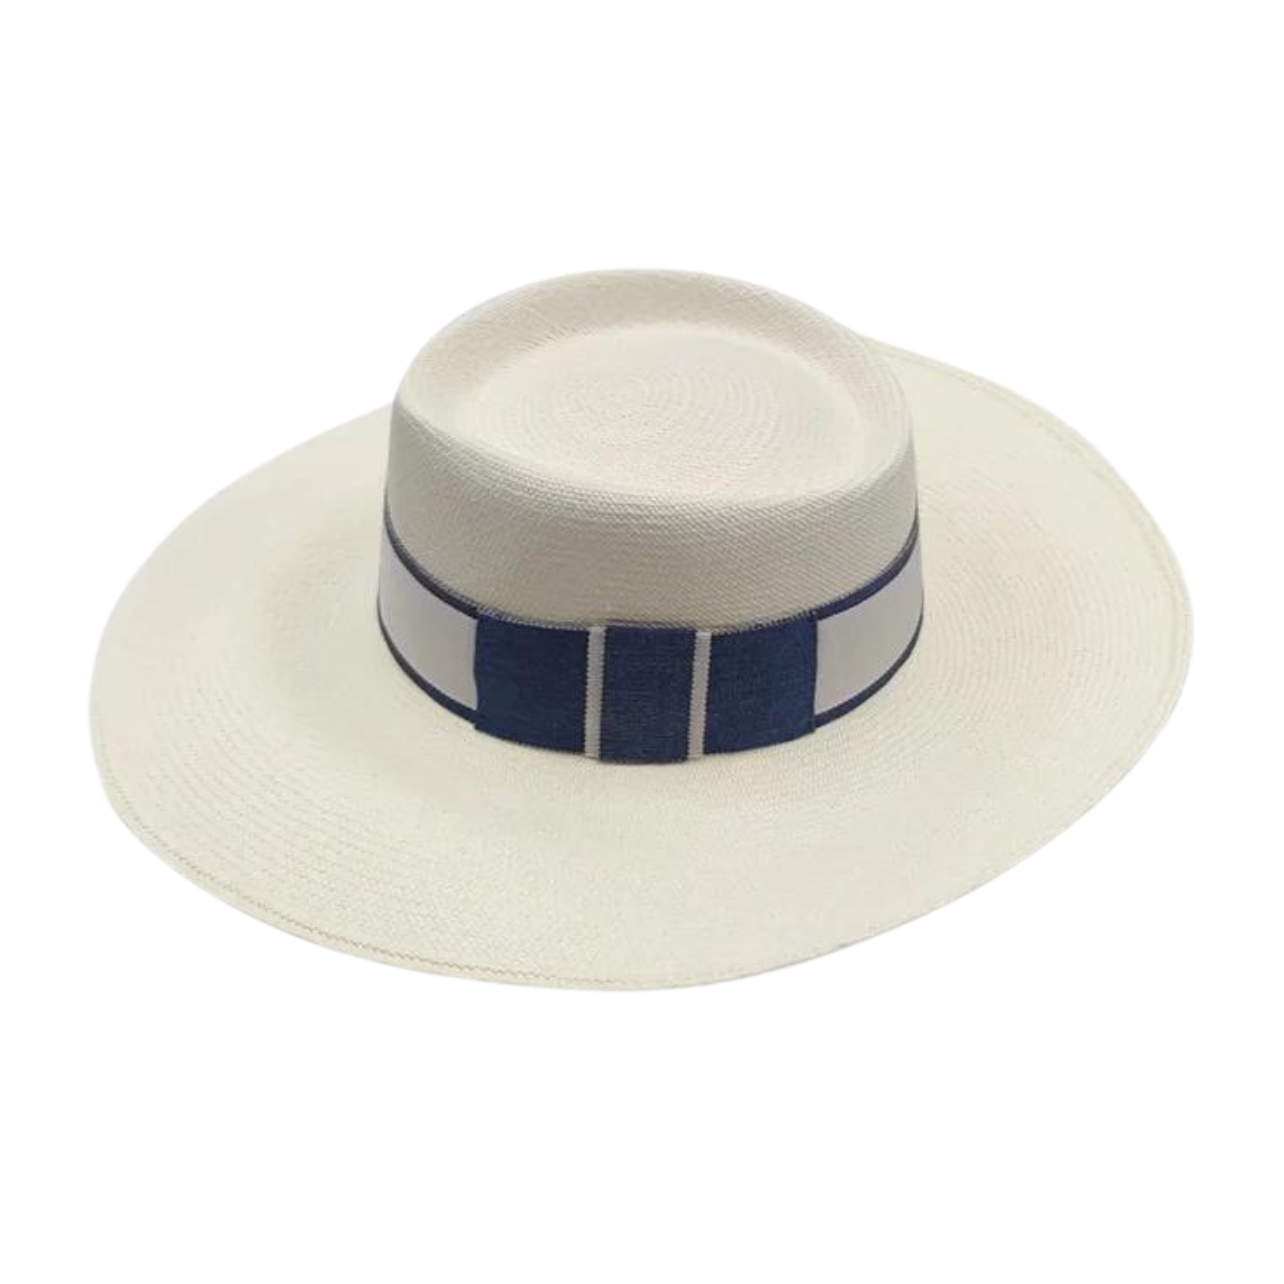 100% Capri white with blue trim fedora hat